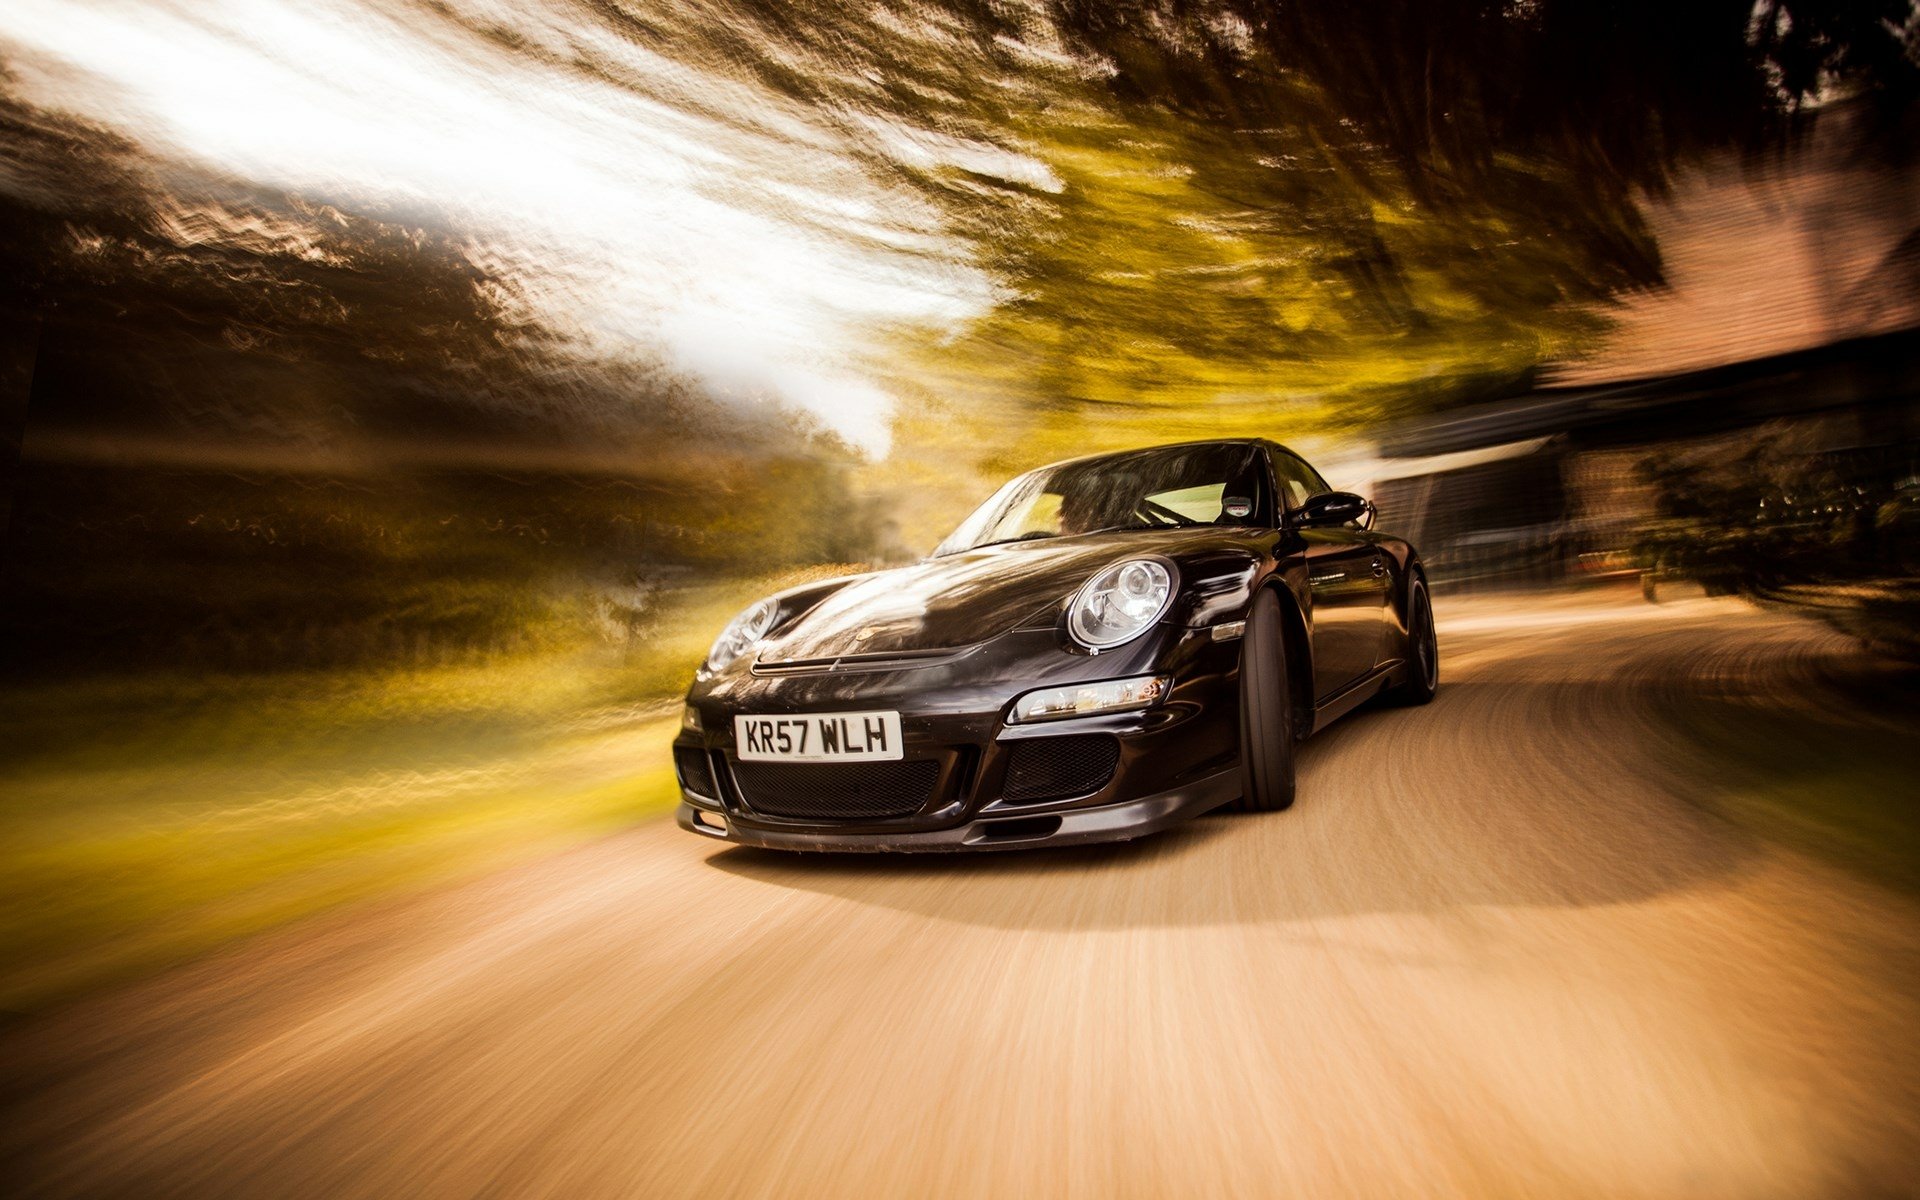 Porsche 911 HD Wallpaper | Background Image | 1920x1200 ...